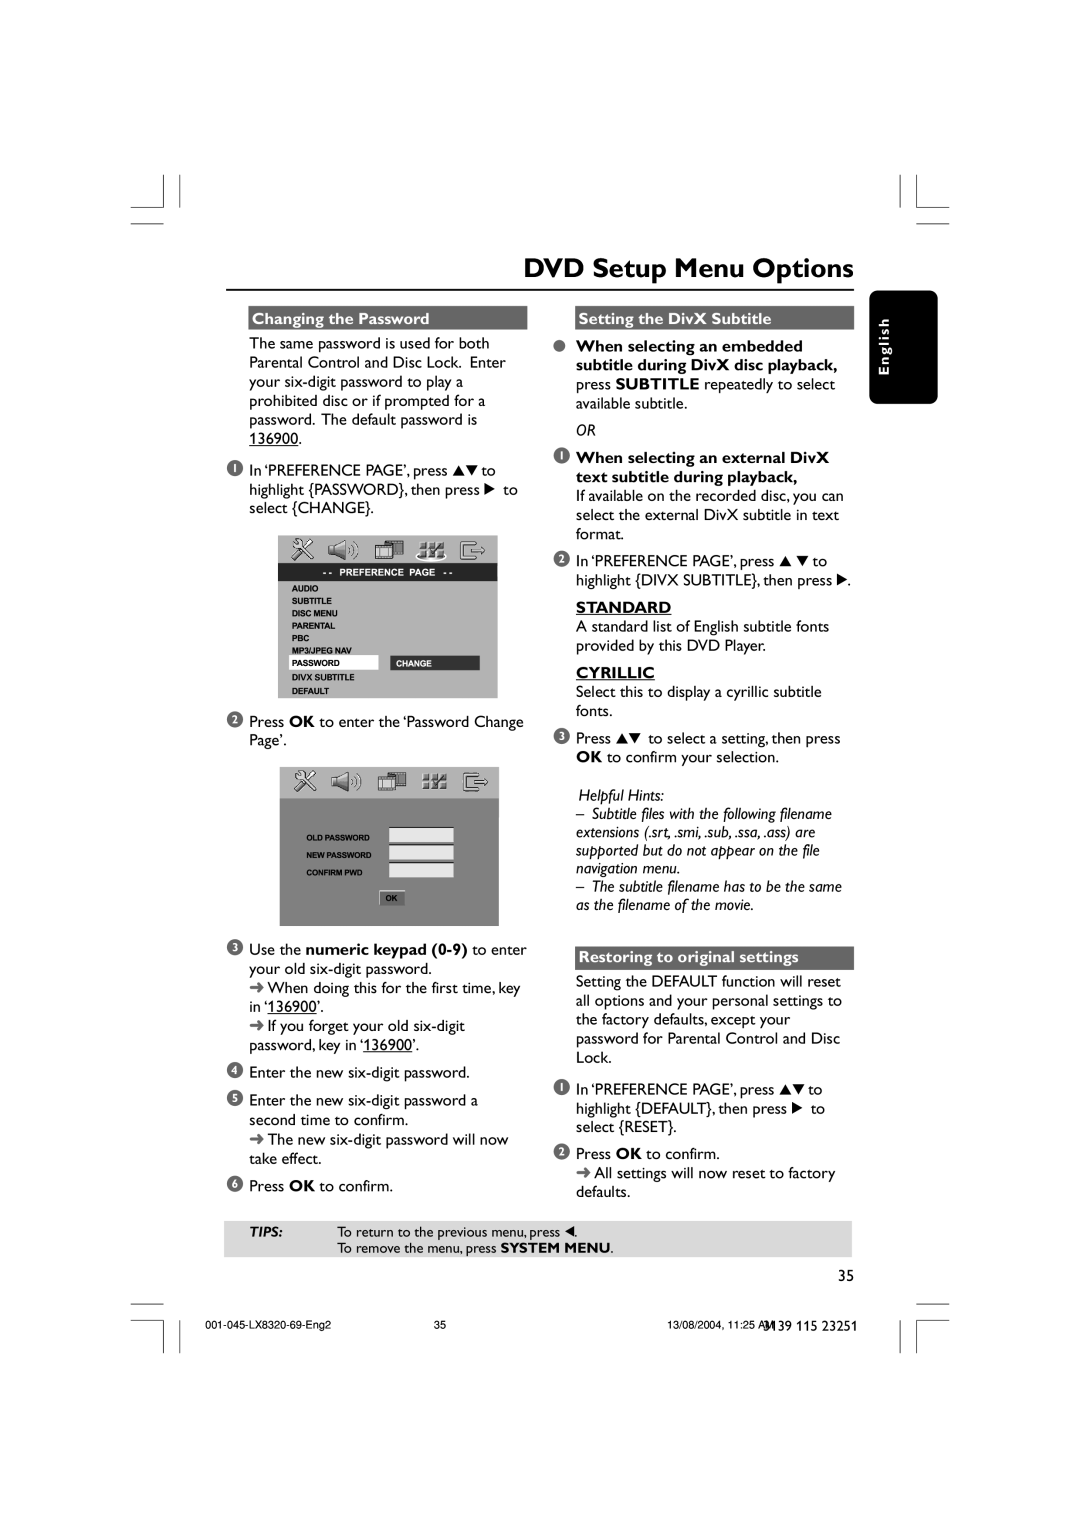 Philips LX8320 DVD Setup Menu Options, Changing the Password, Setting the DivX Subtitle, Standard, Cyrillic, Helpful Hints 